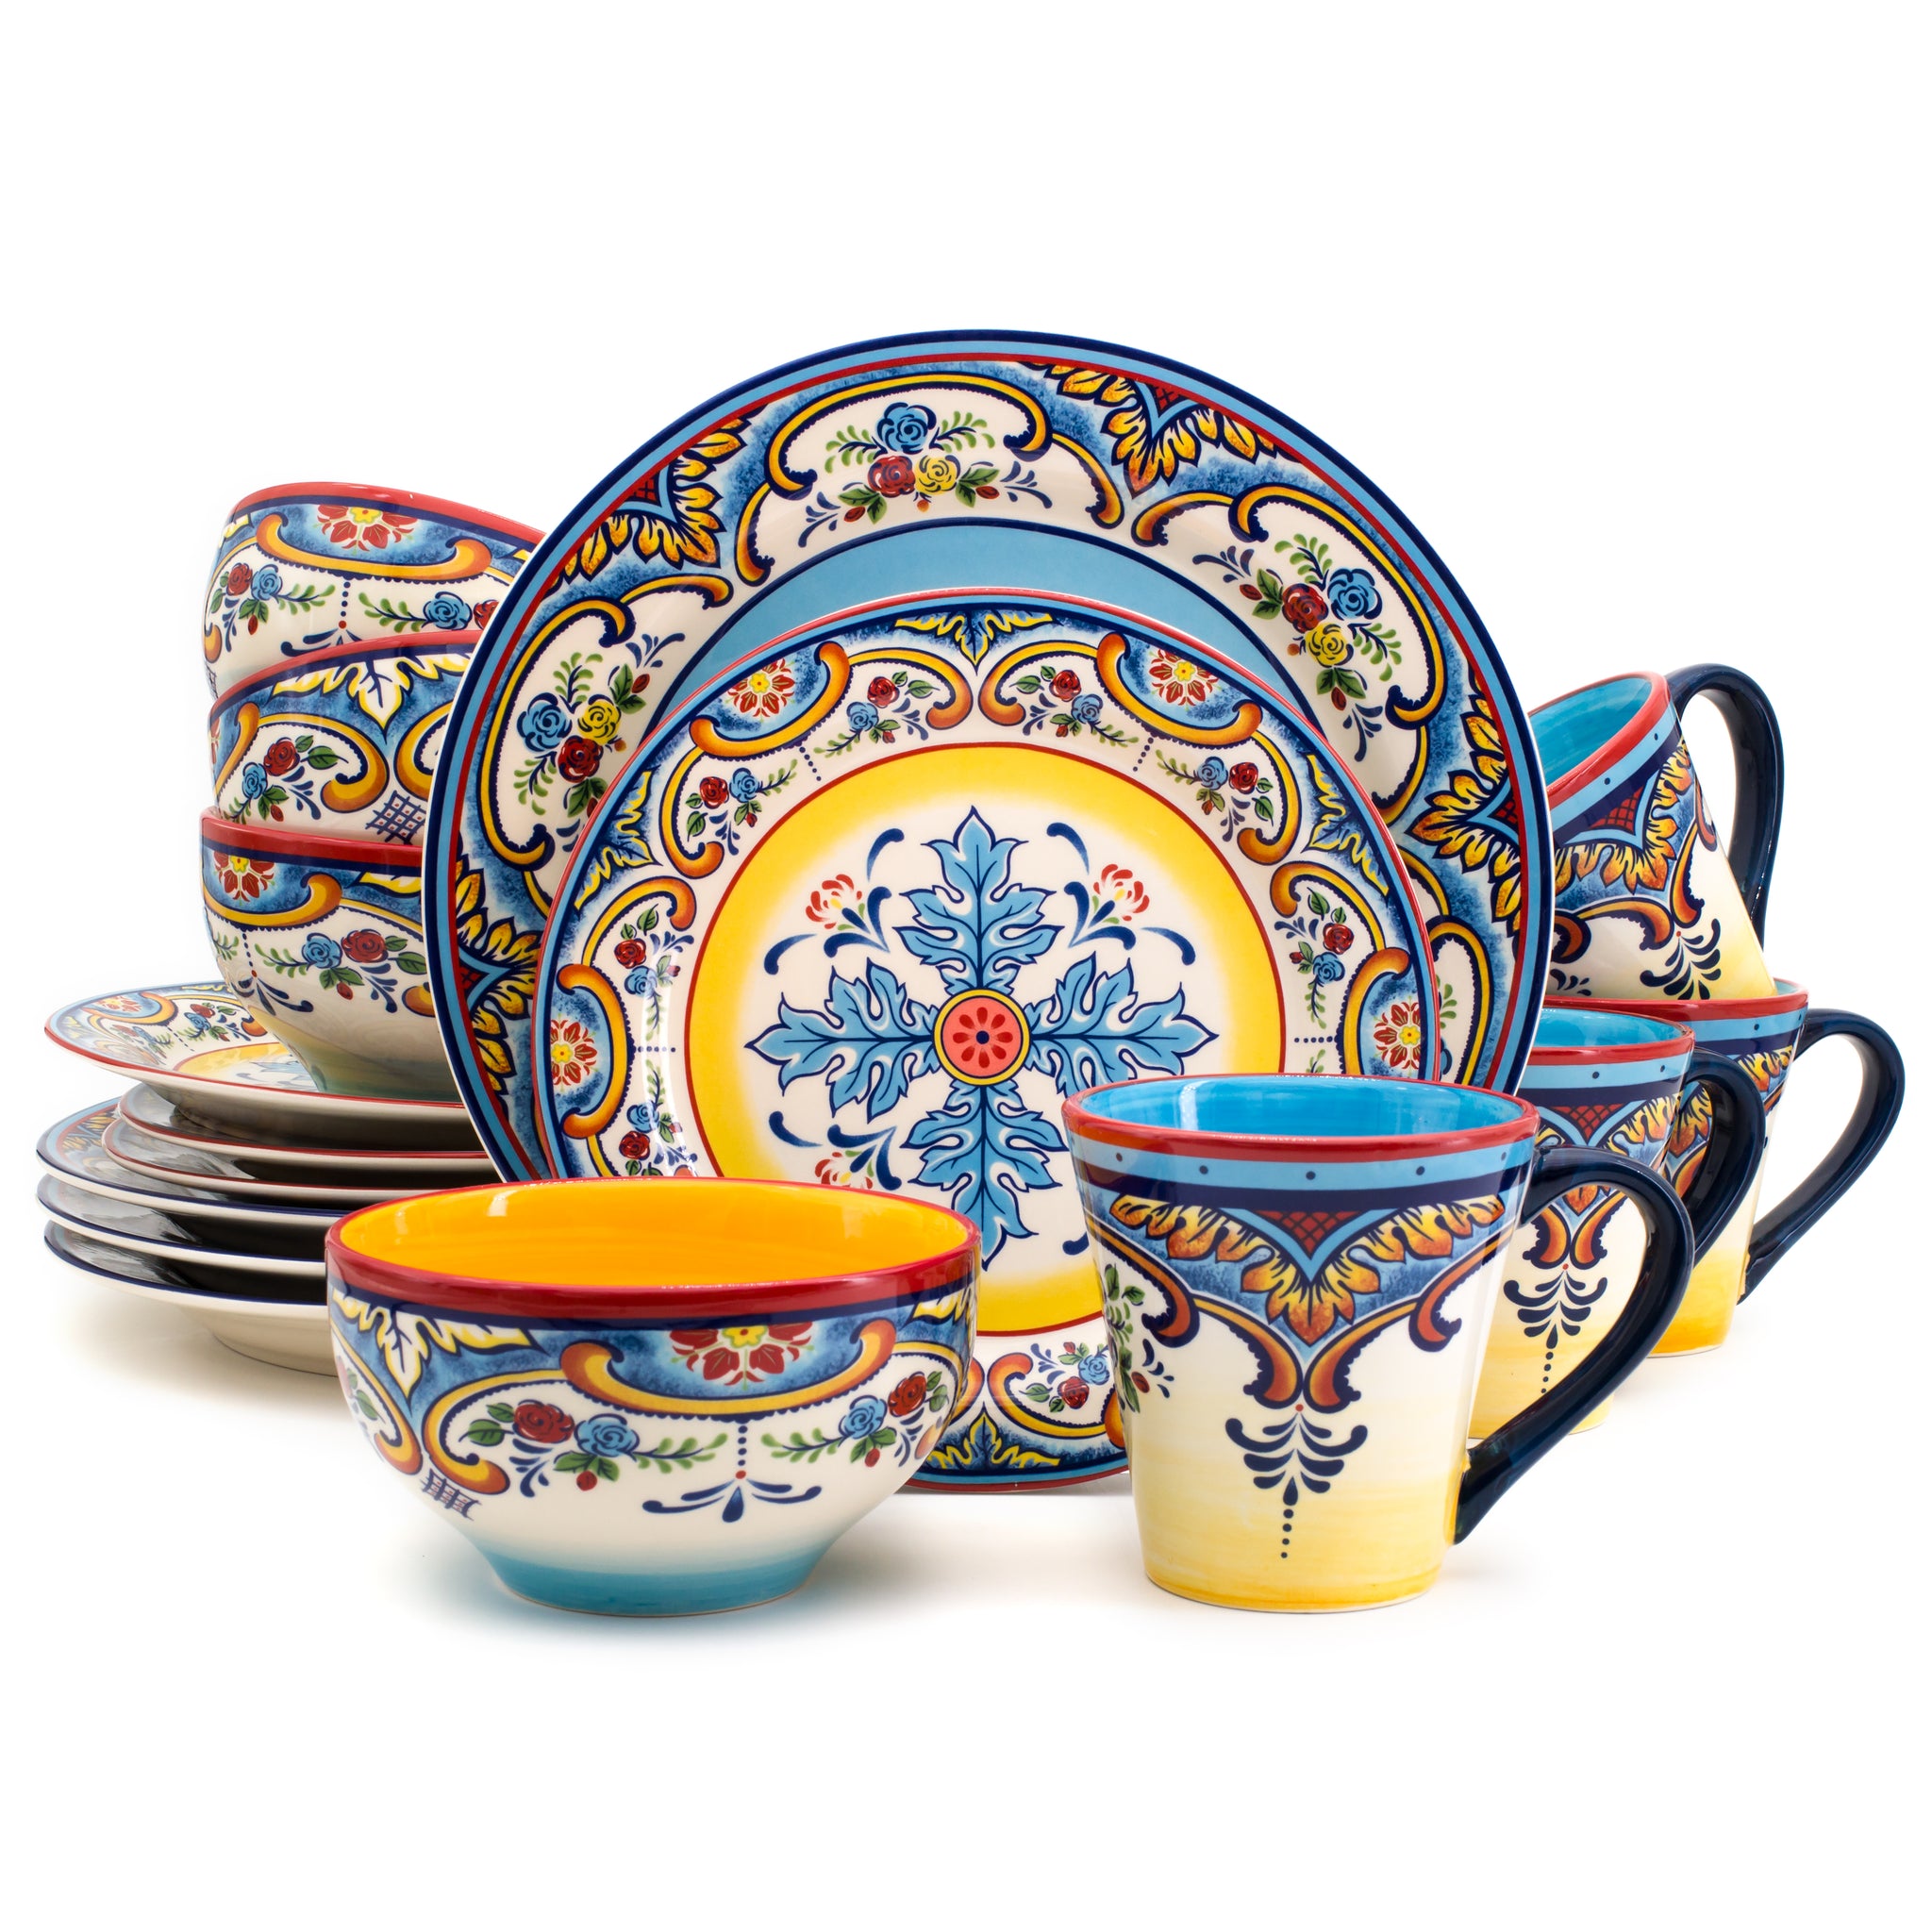 Zanzibar 16 Piece Stoneware Dinnerware Set, Service for 4 - Euro Ceramica 